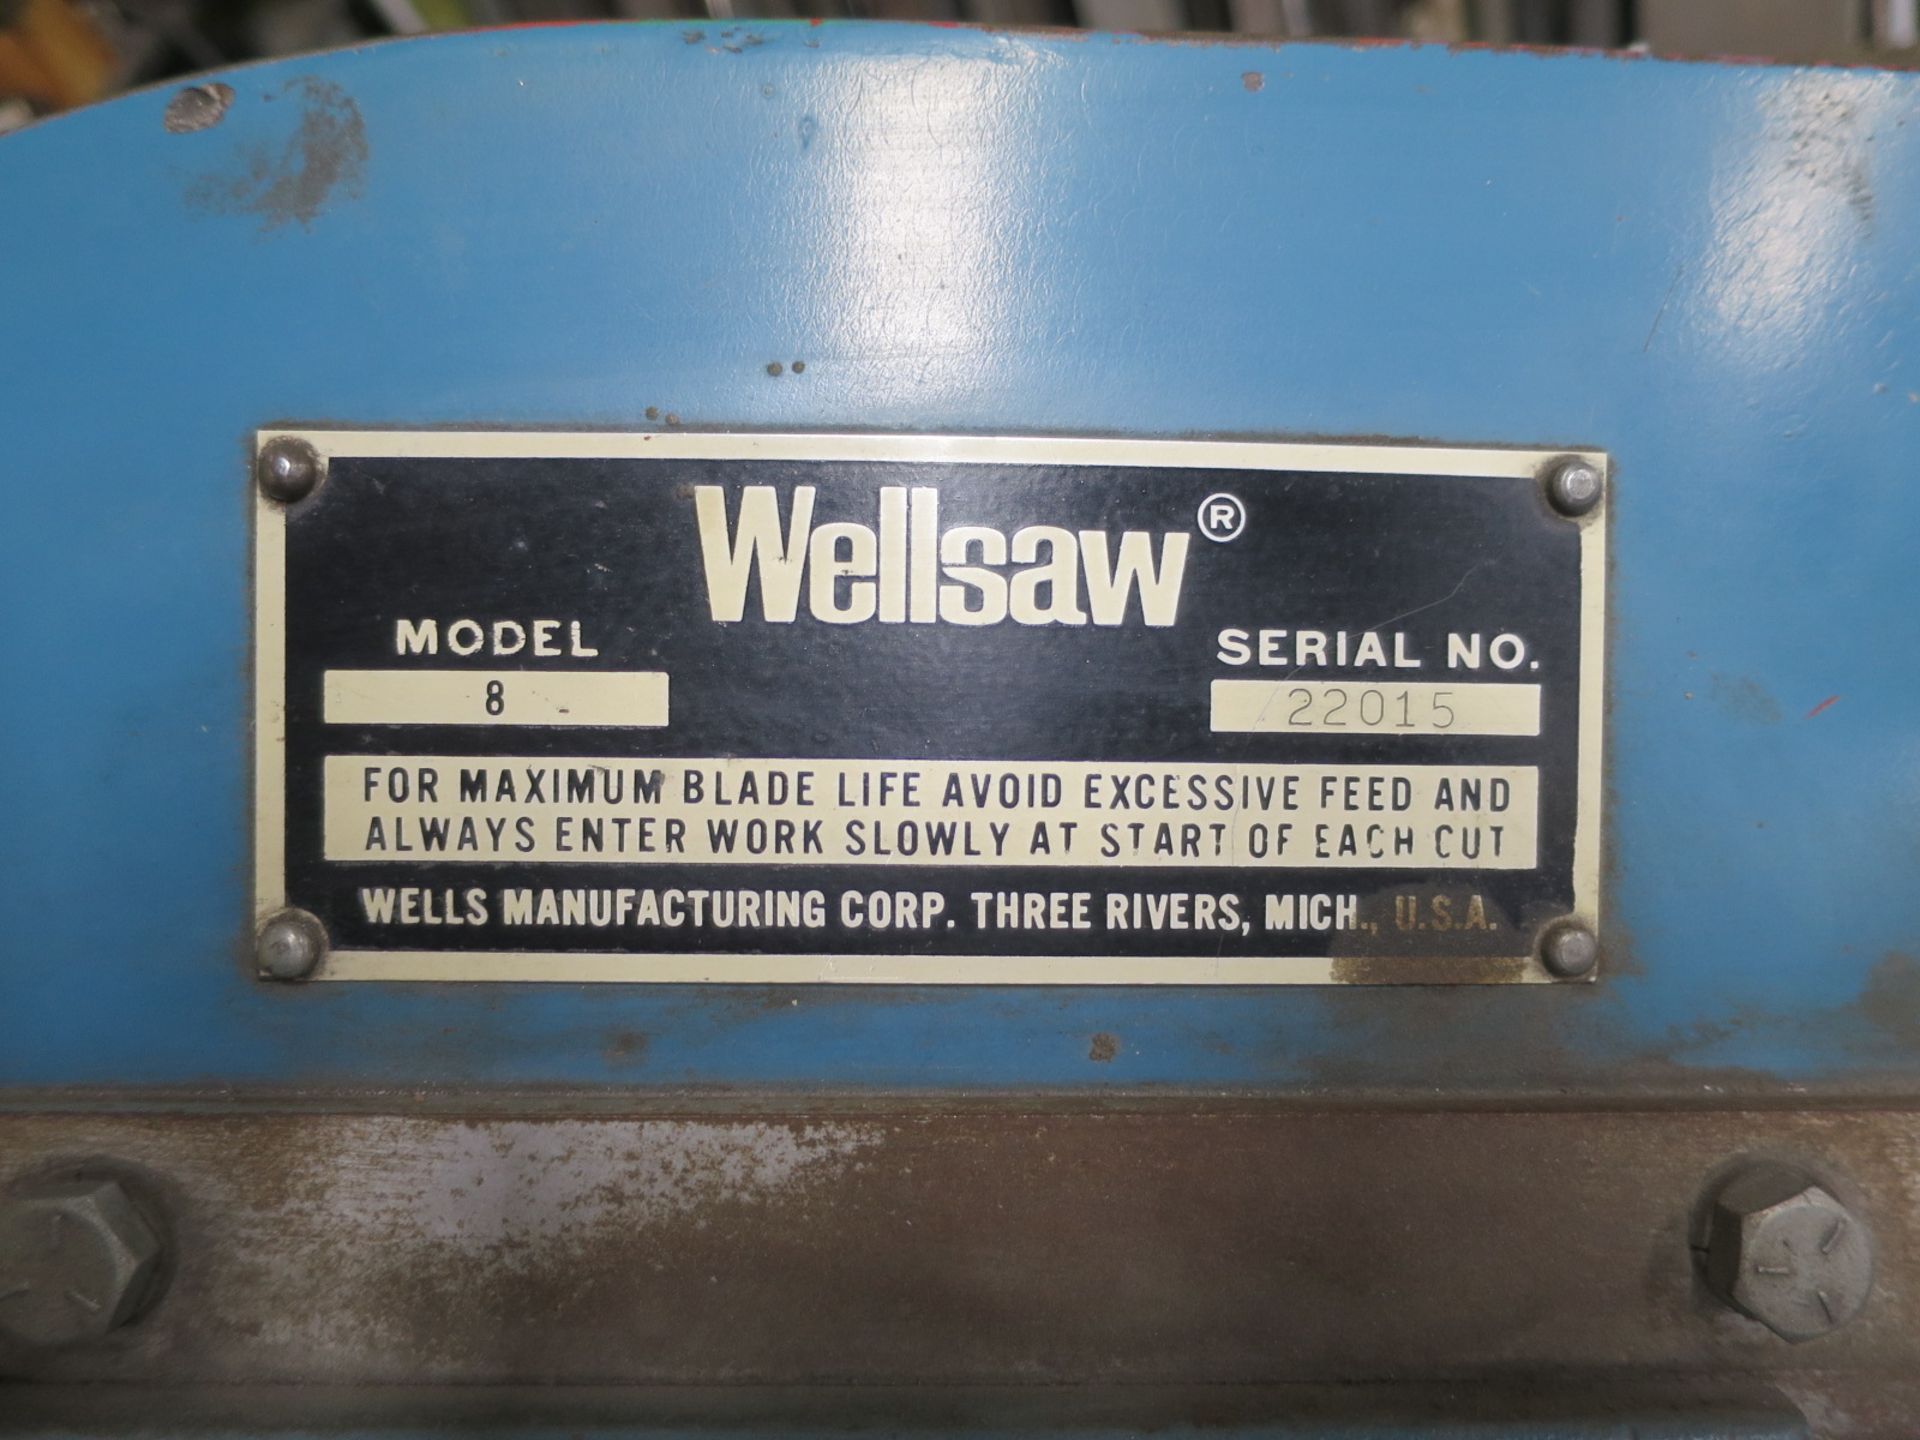 Wellsaw Model 8 Horizontal Band Saw, Sn 22015 - Image 2 of 4